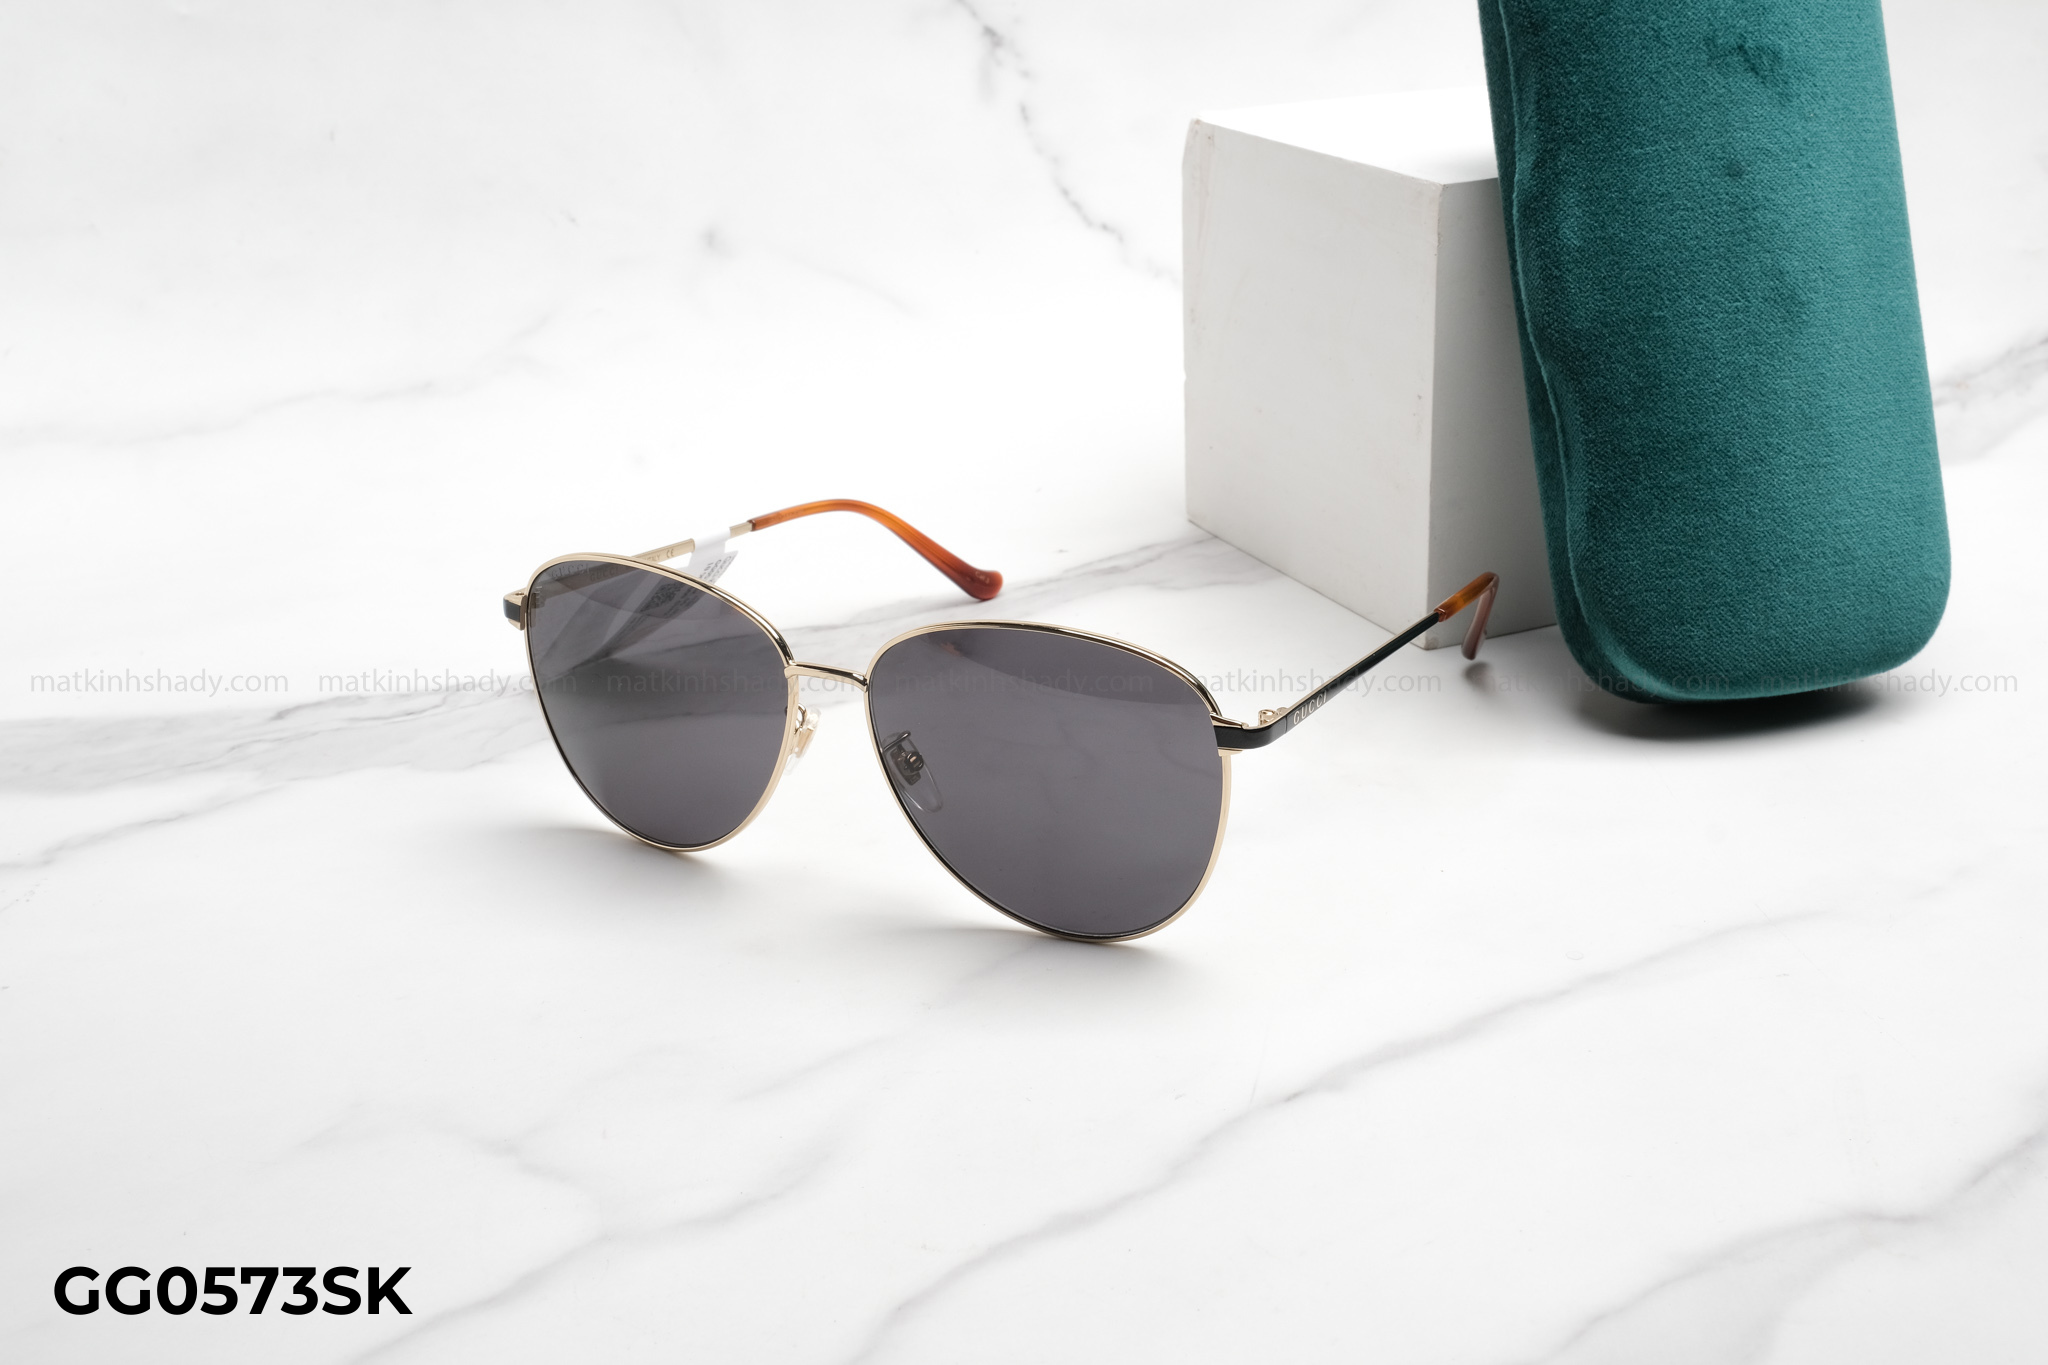  Gucci Eyewear - Sunglasses - GG0573SK 